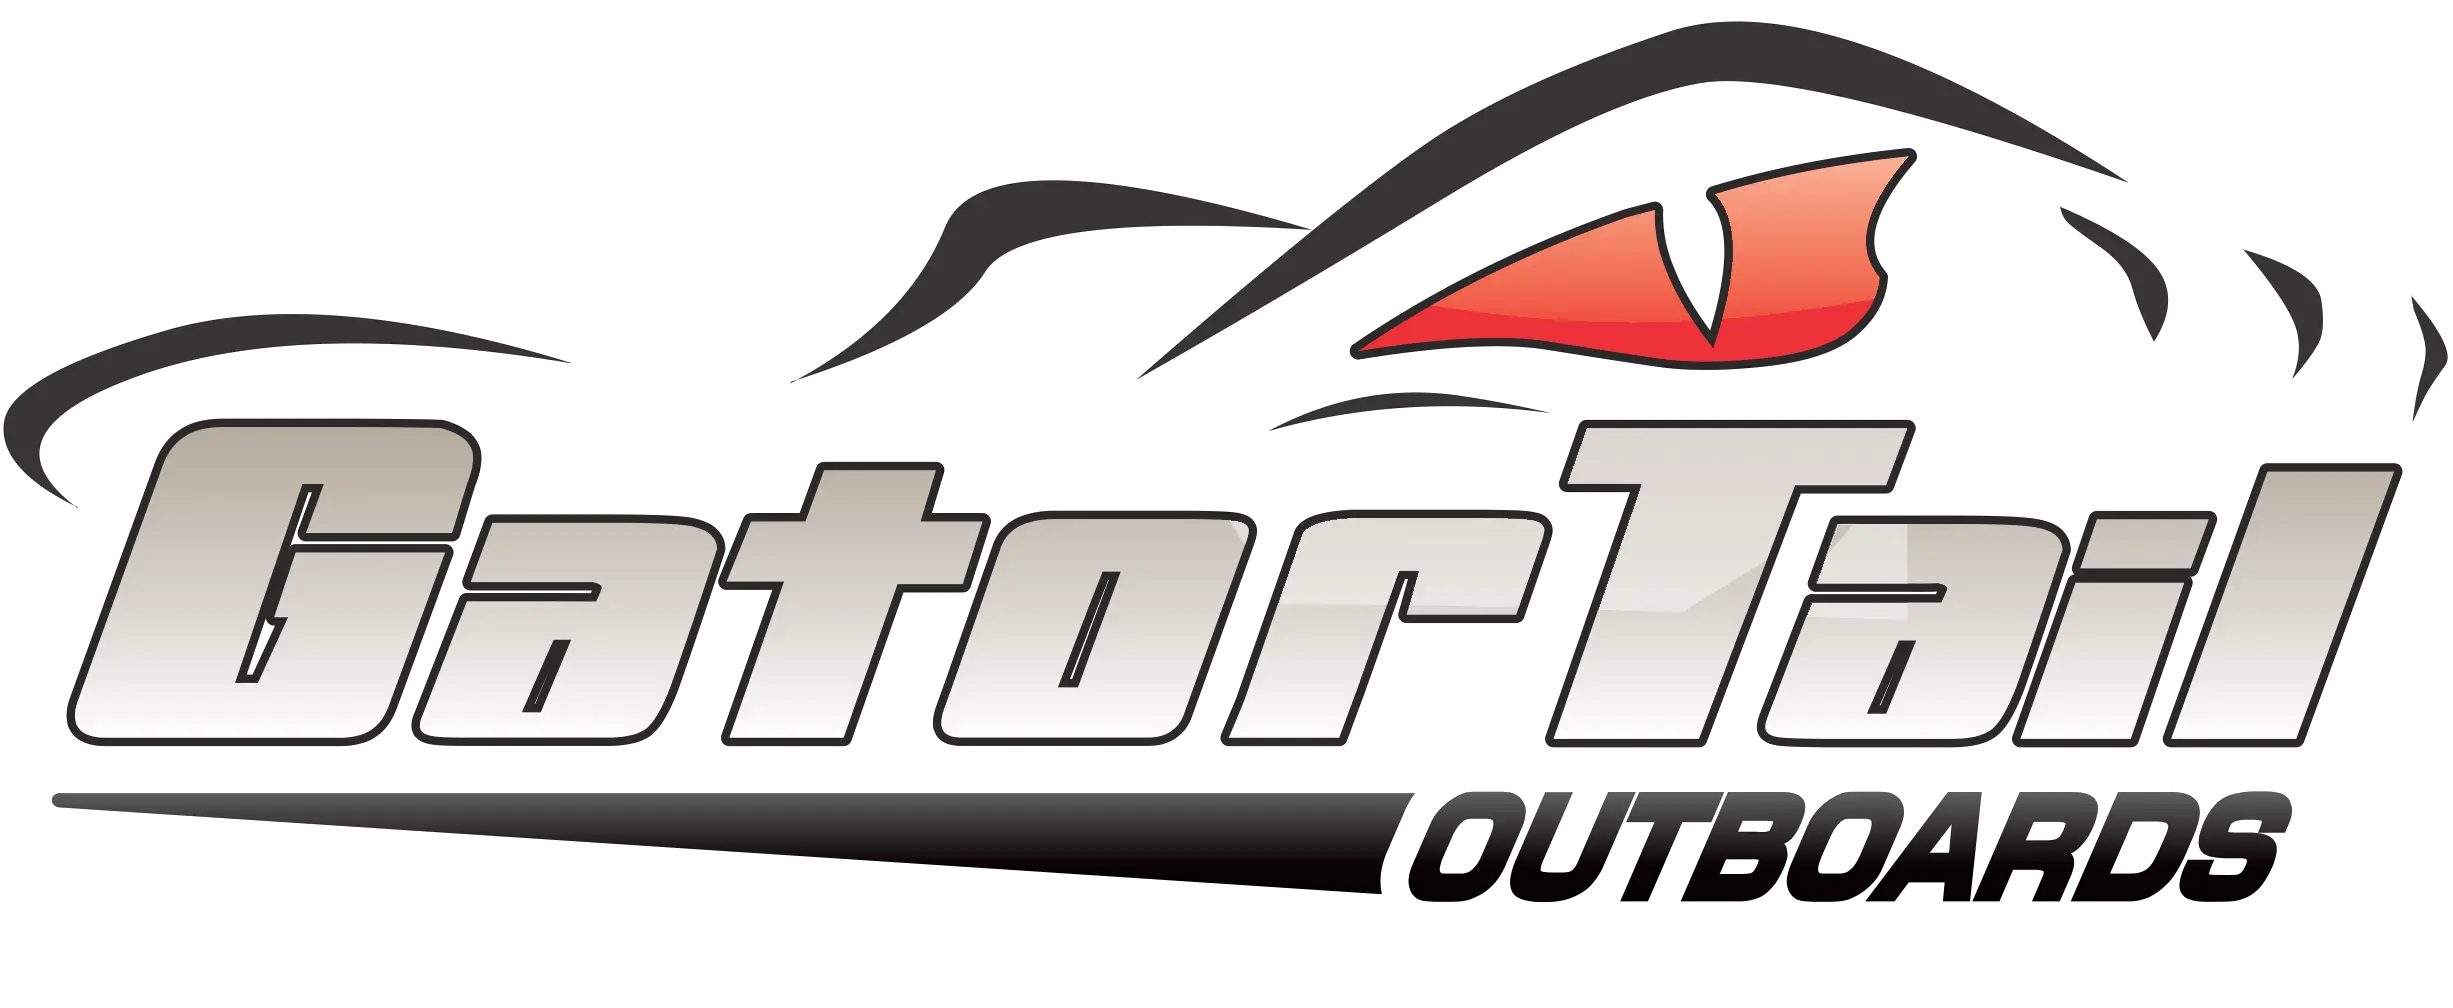 Free Gator Logo Black And White Download Clip Art Glider Png Gator Logo Png